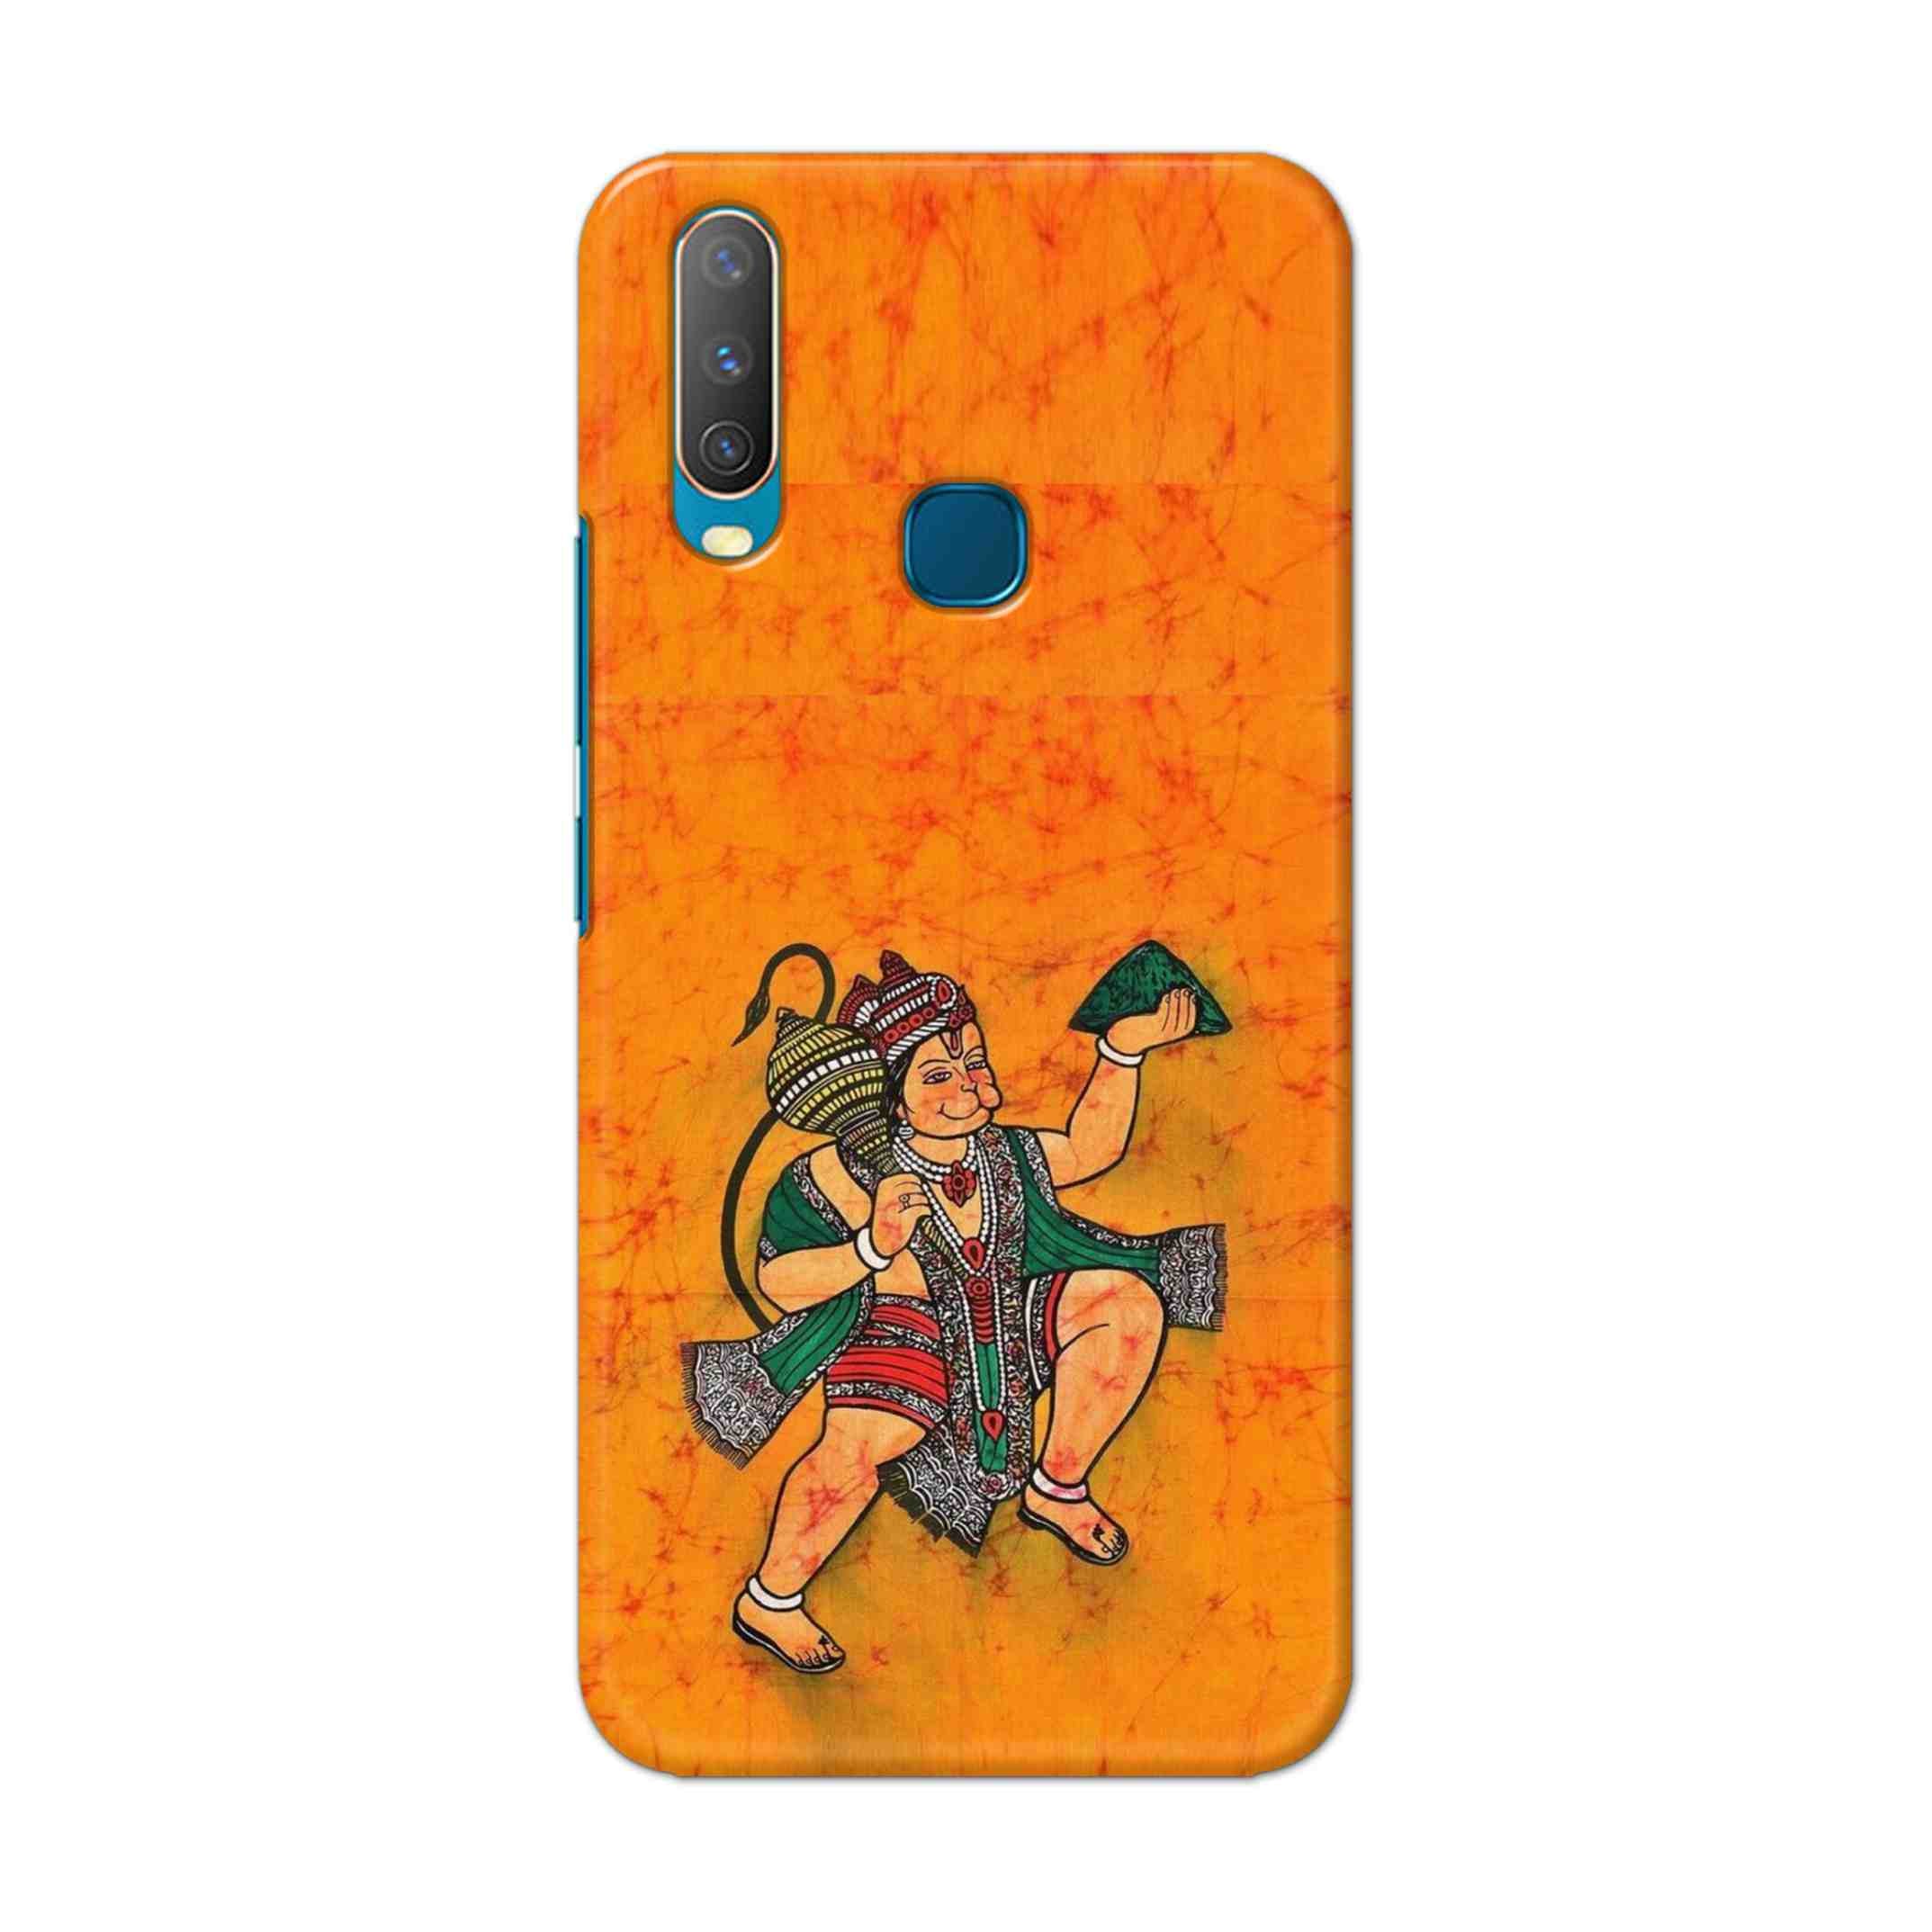 Buy Hanuman Ji Hard Back Mobile Phone Case Cover For Vivo Y17 / U10 Online